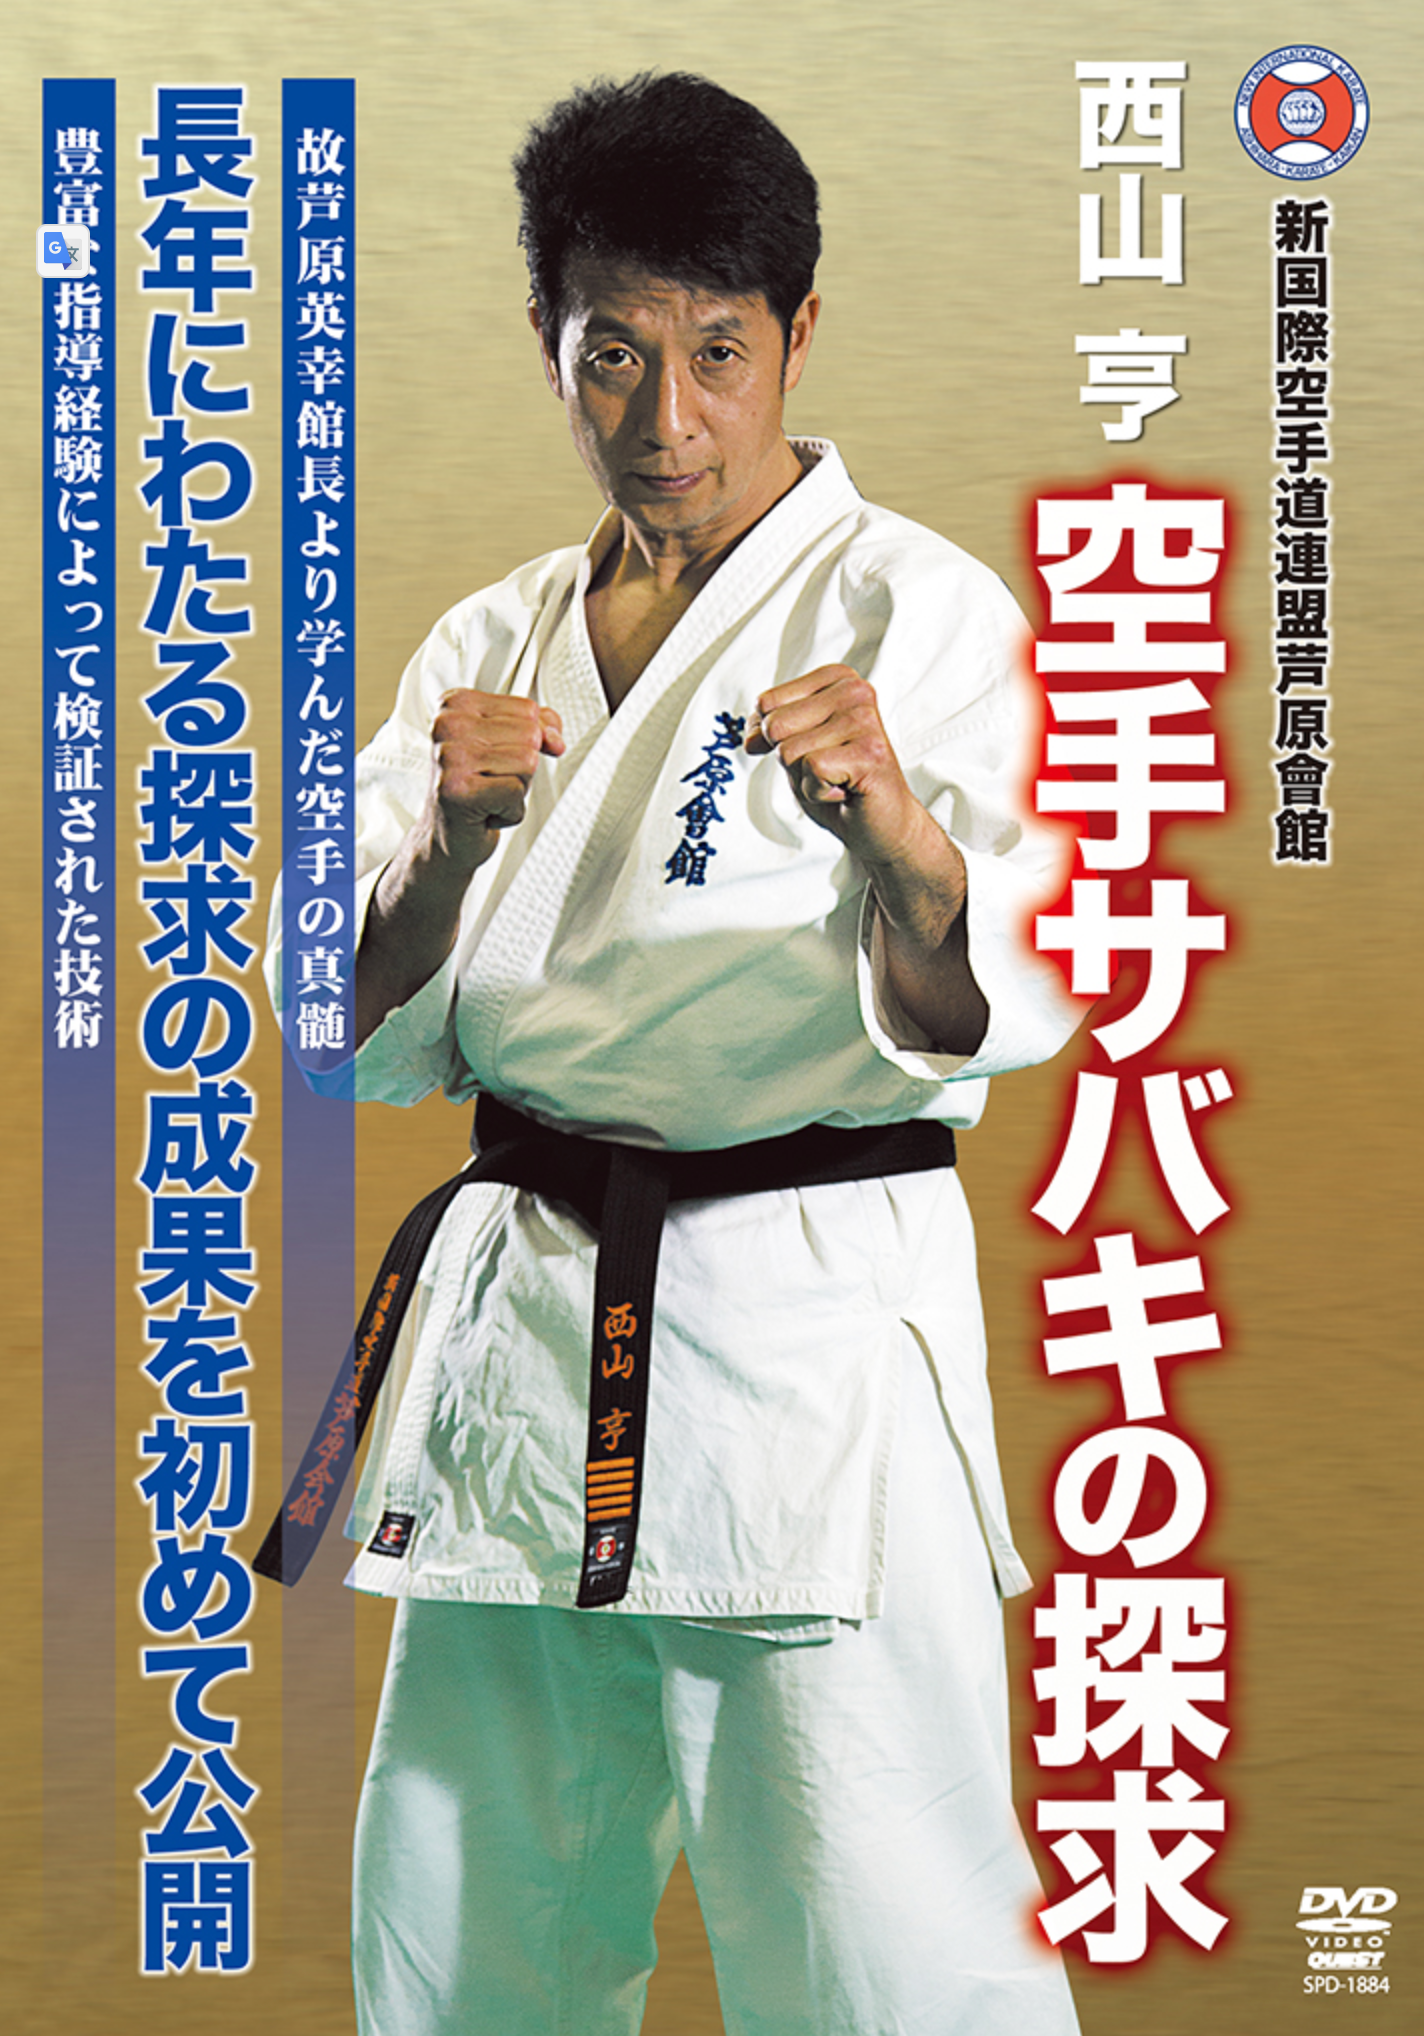 The Sabaki Karate Quest DVD by Toru Nishiyama - Budovideos Inc